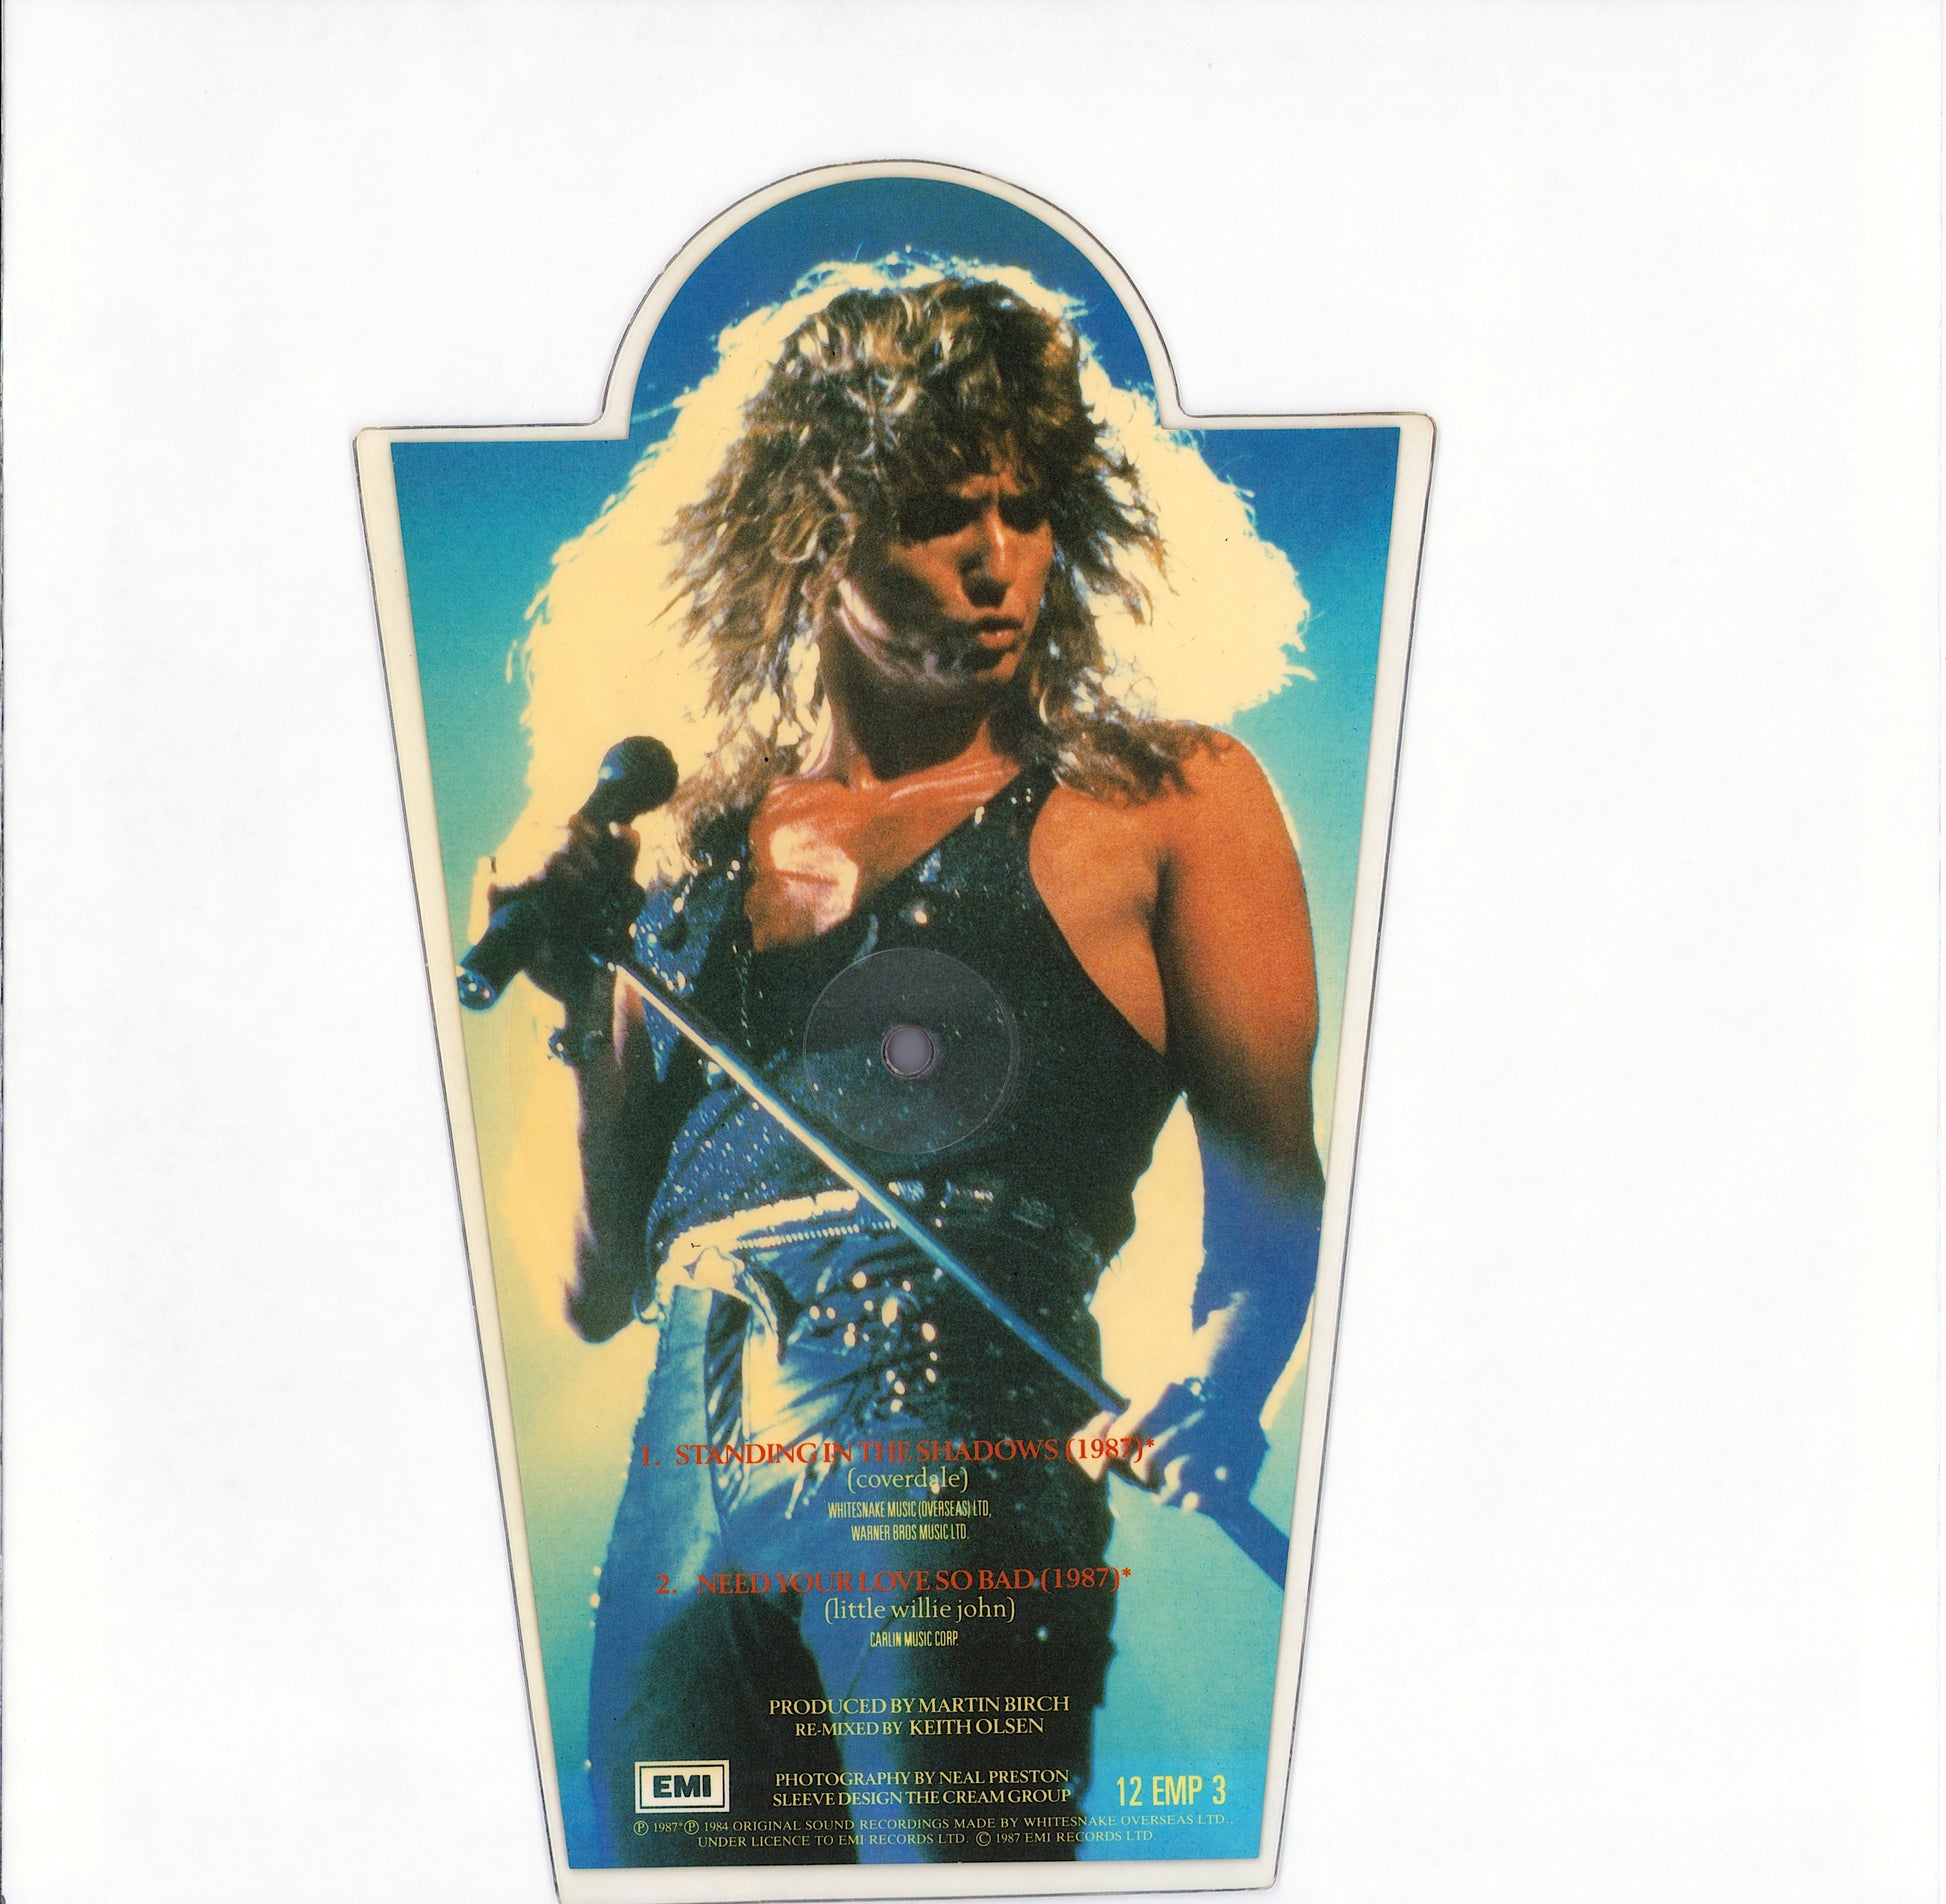 Whitesnake - Is This Love Vinyl 5" Picture Disc Single